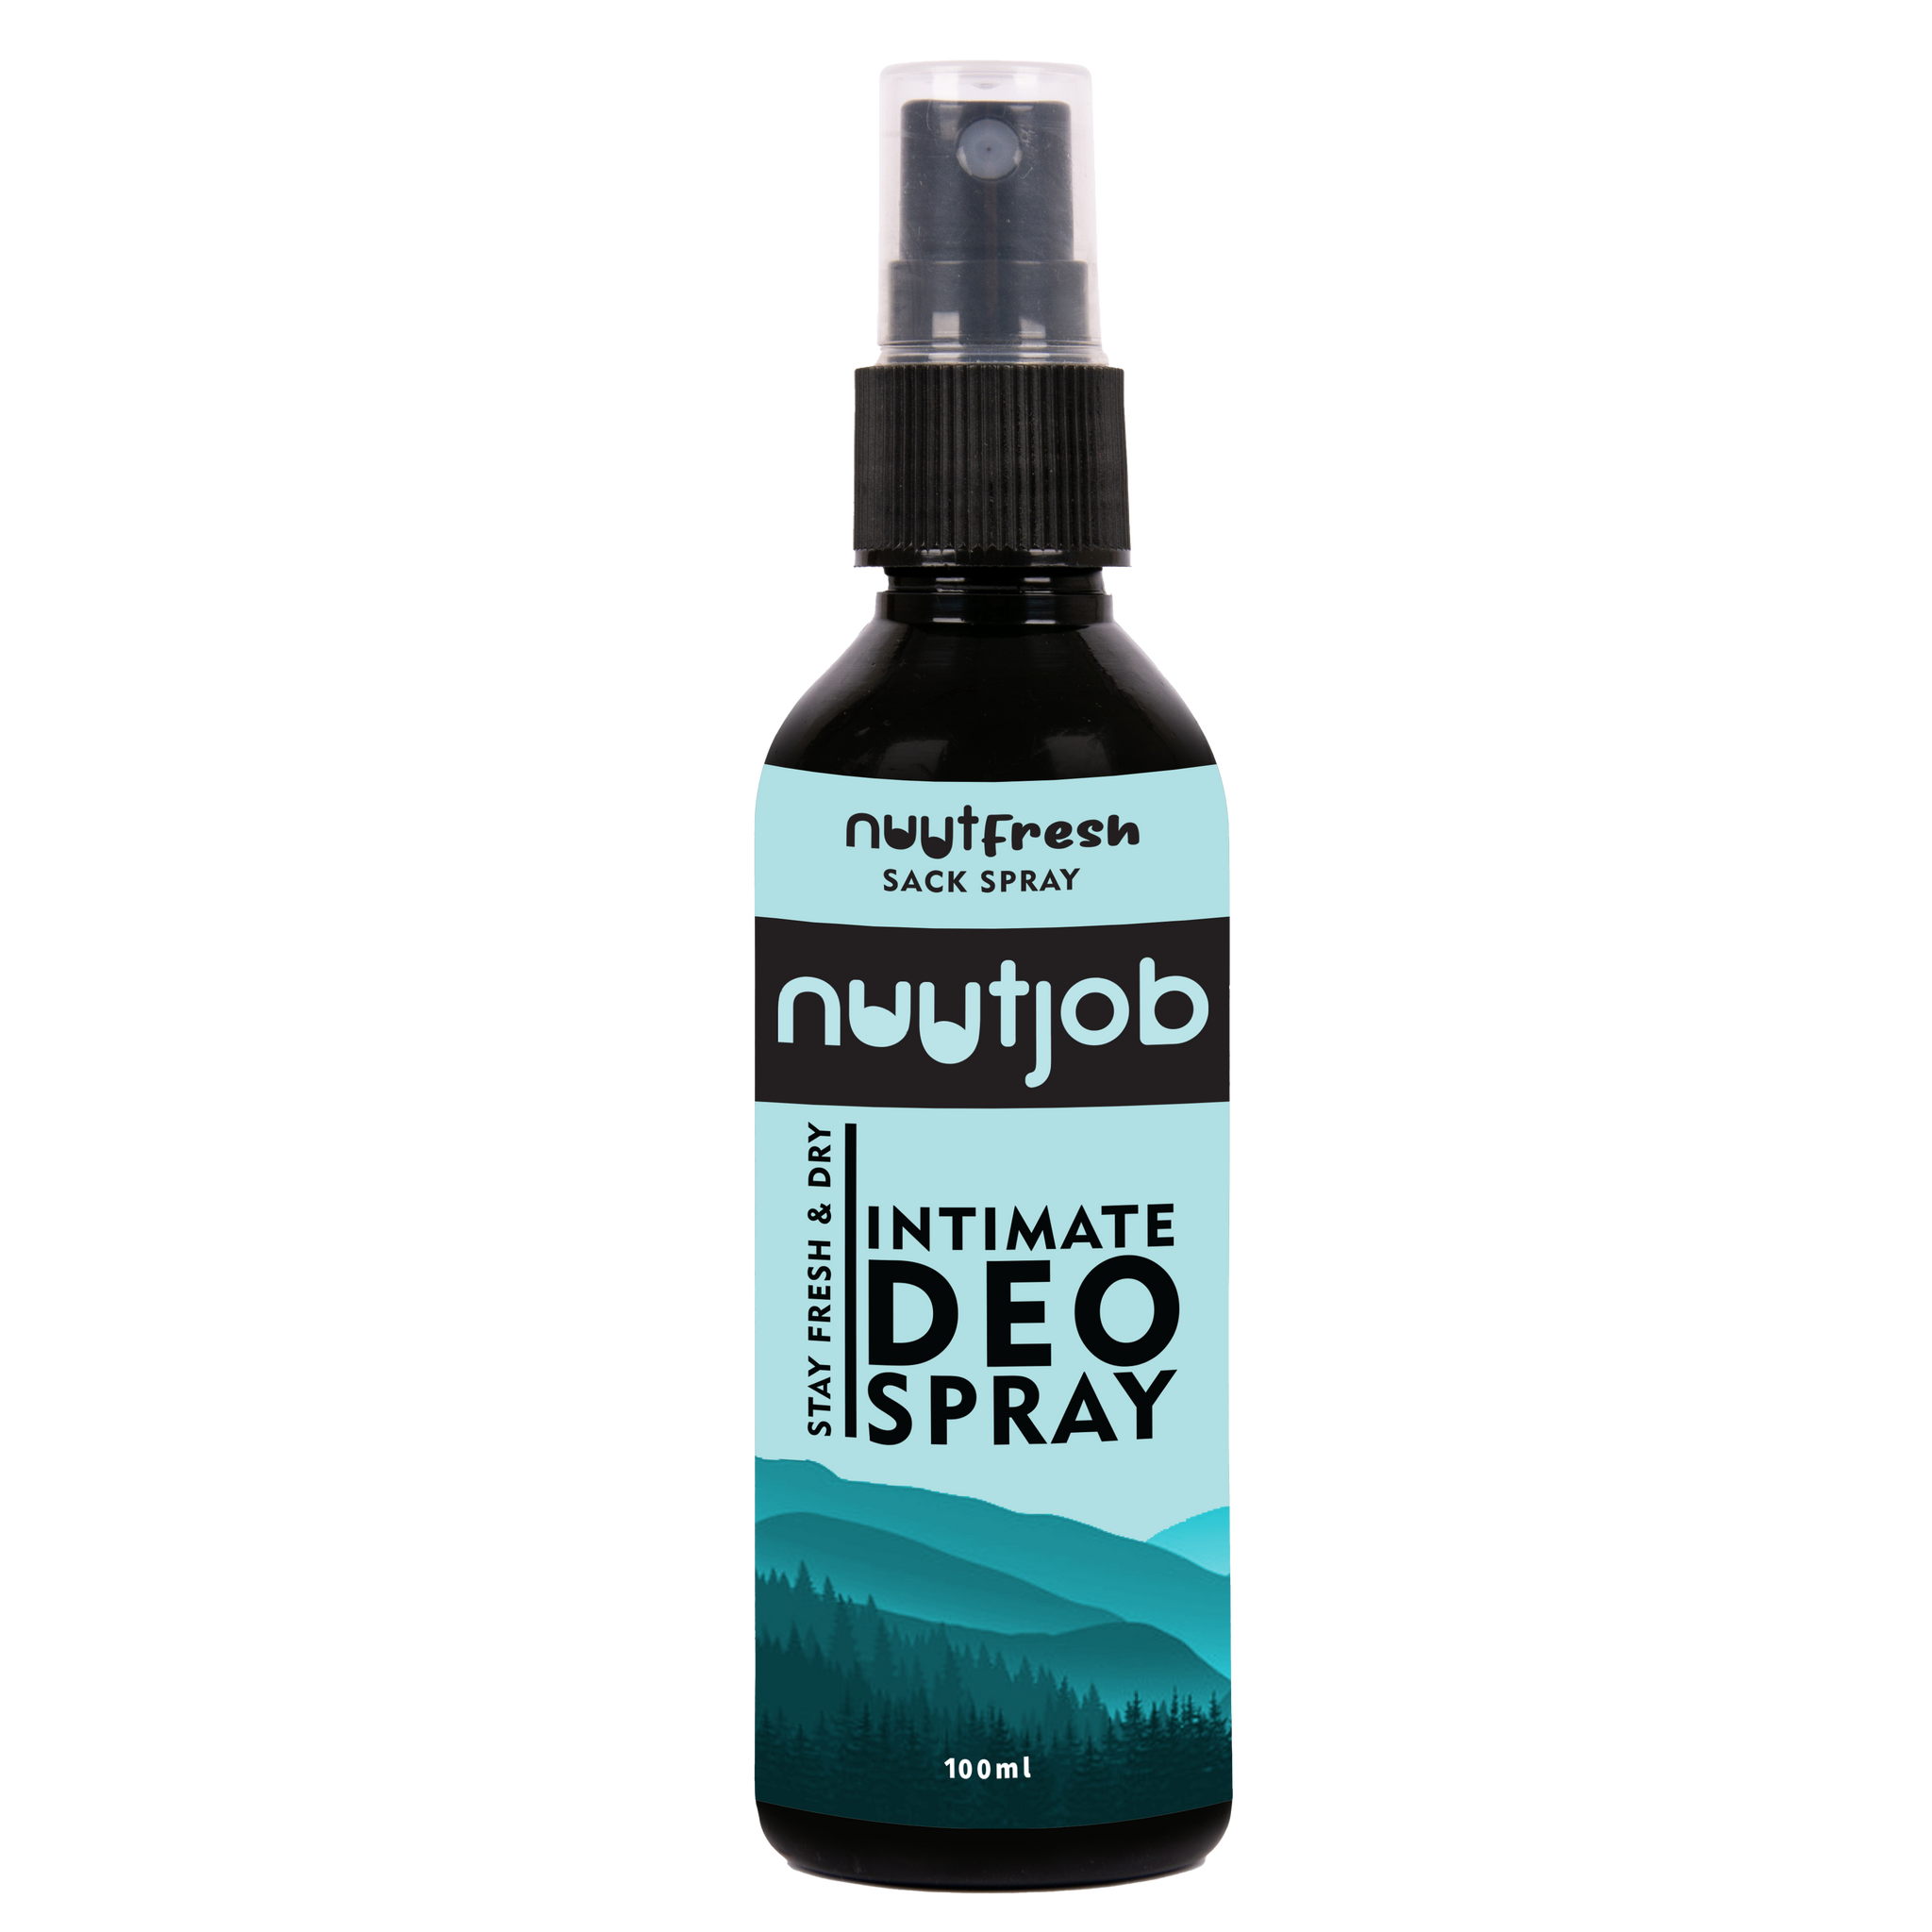 Nuutfresh Intimate Sack Spray Deodorant 100ml